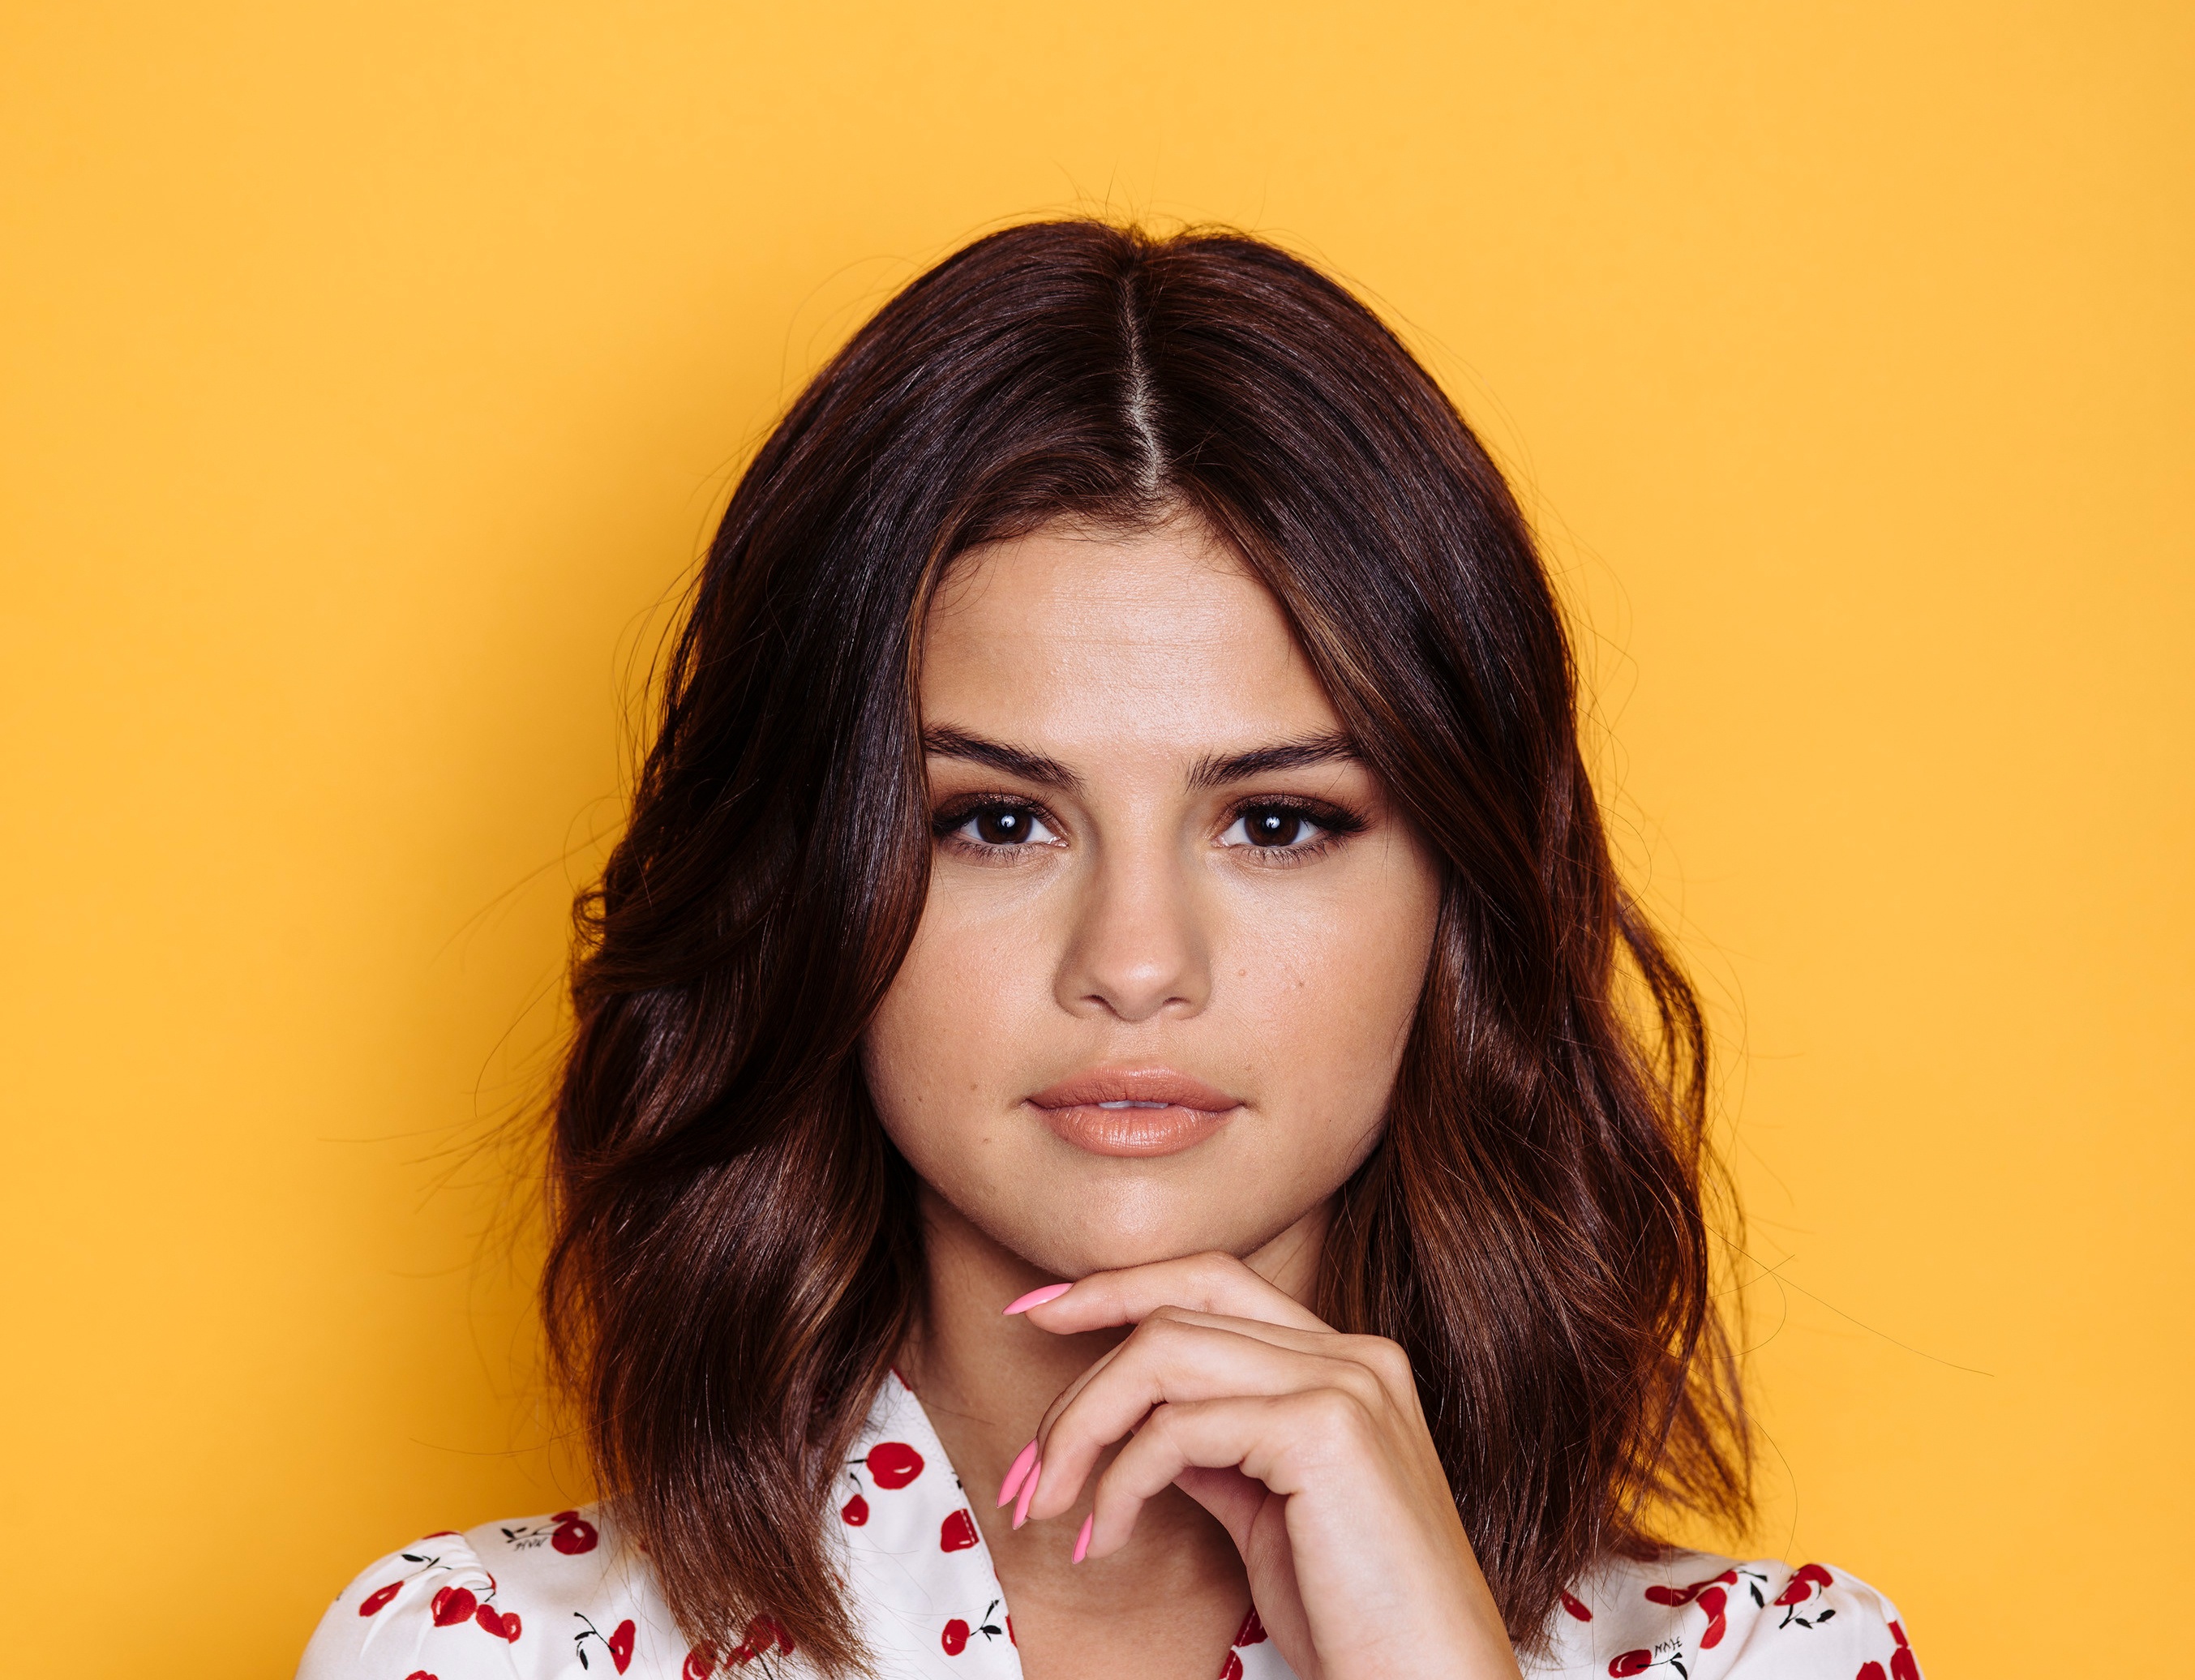 Selena Gomez New York Times Photoshoot 2017 Hd Music 4k Wallpapers